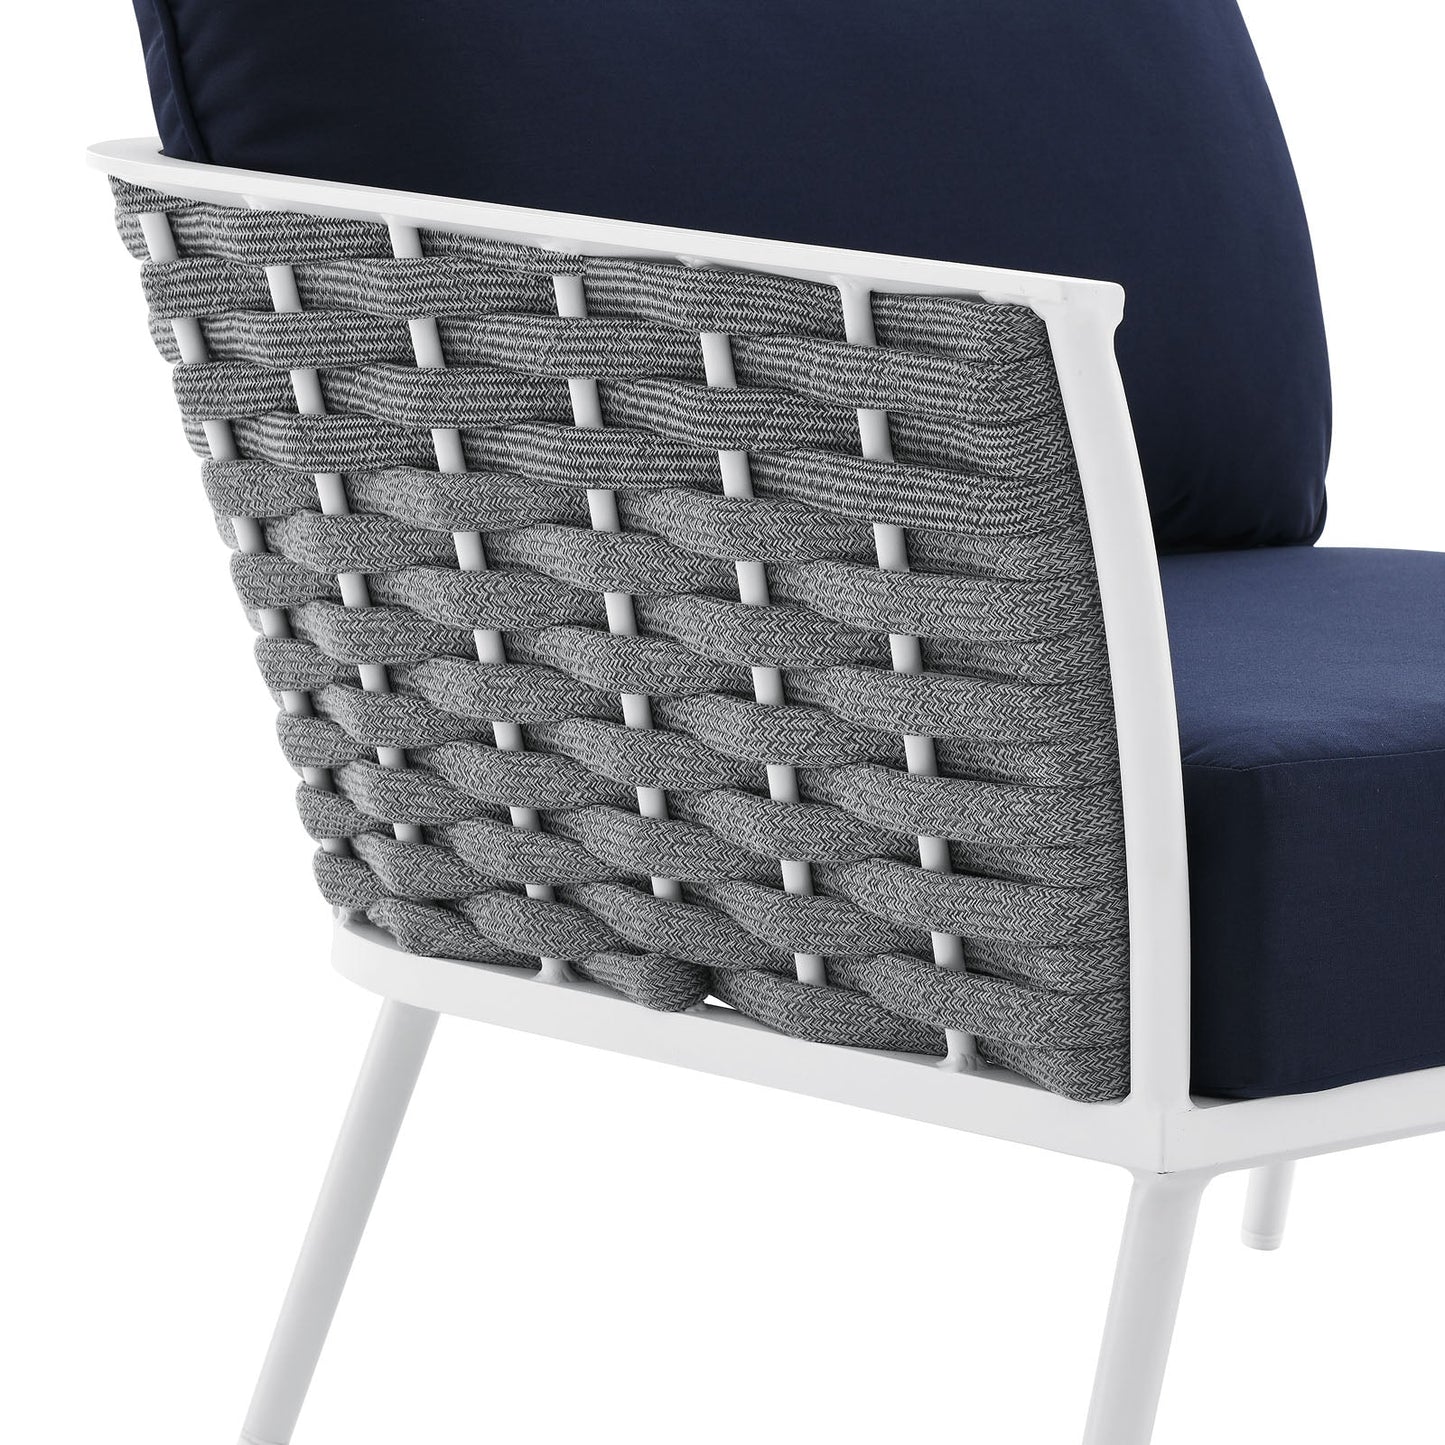 Hanna Outdoor Patio Aluminum Left-Facing Armchair